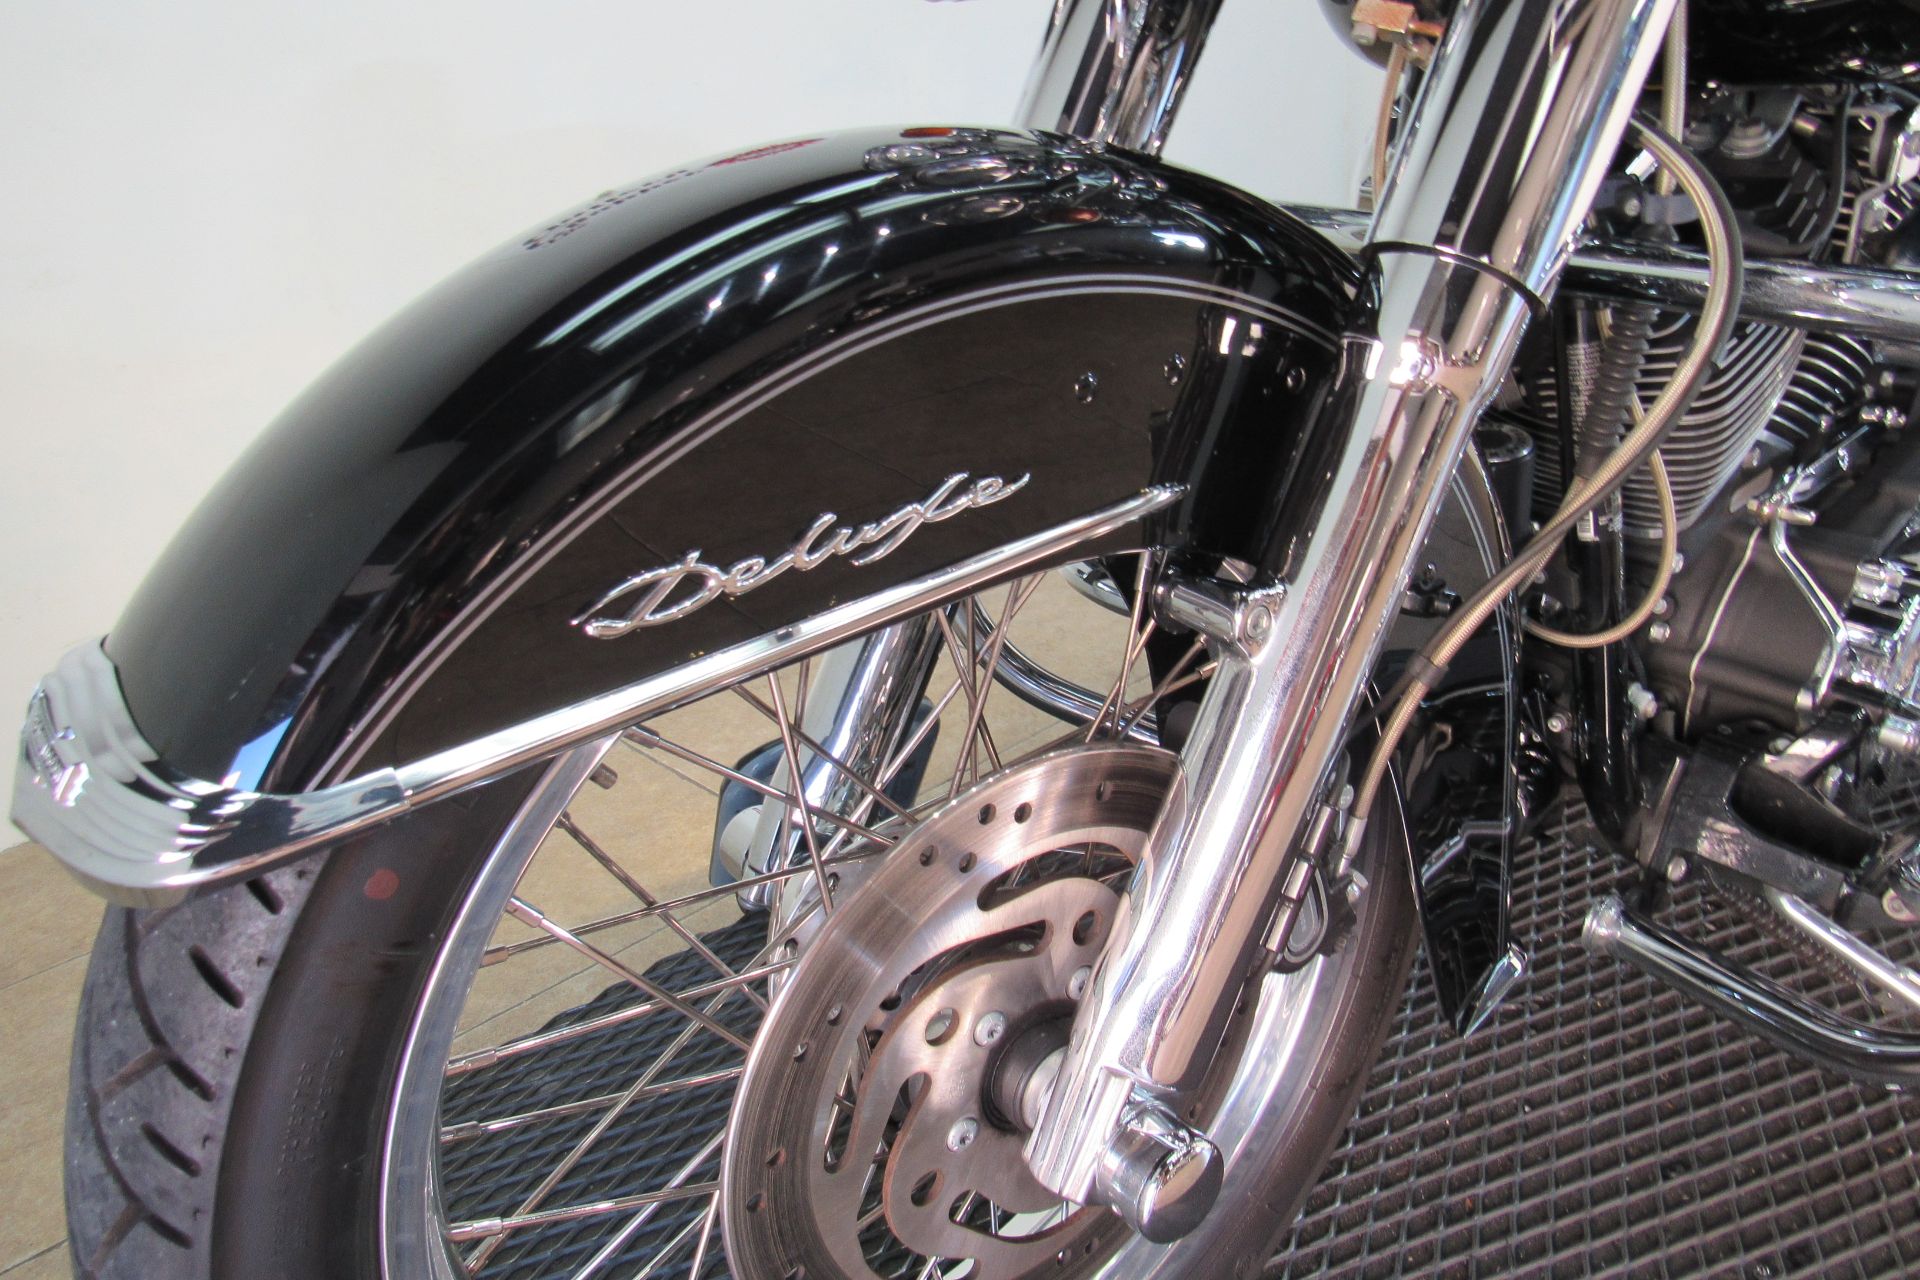 2014 Harley-Davidson Softail® Deluxe in Temecula, California - Photo 22